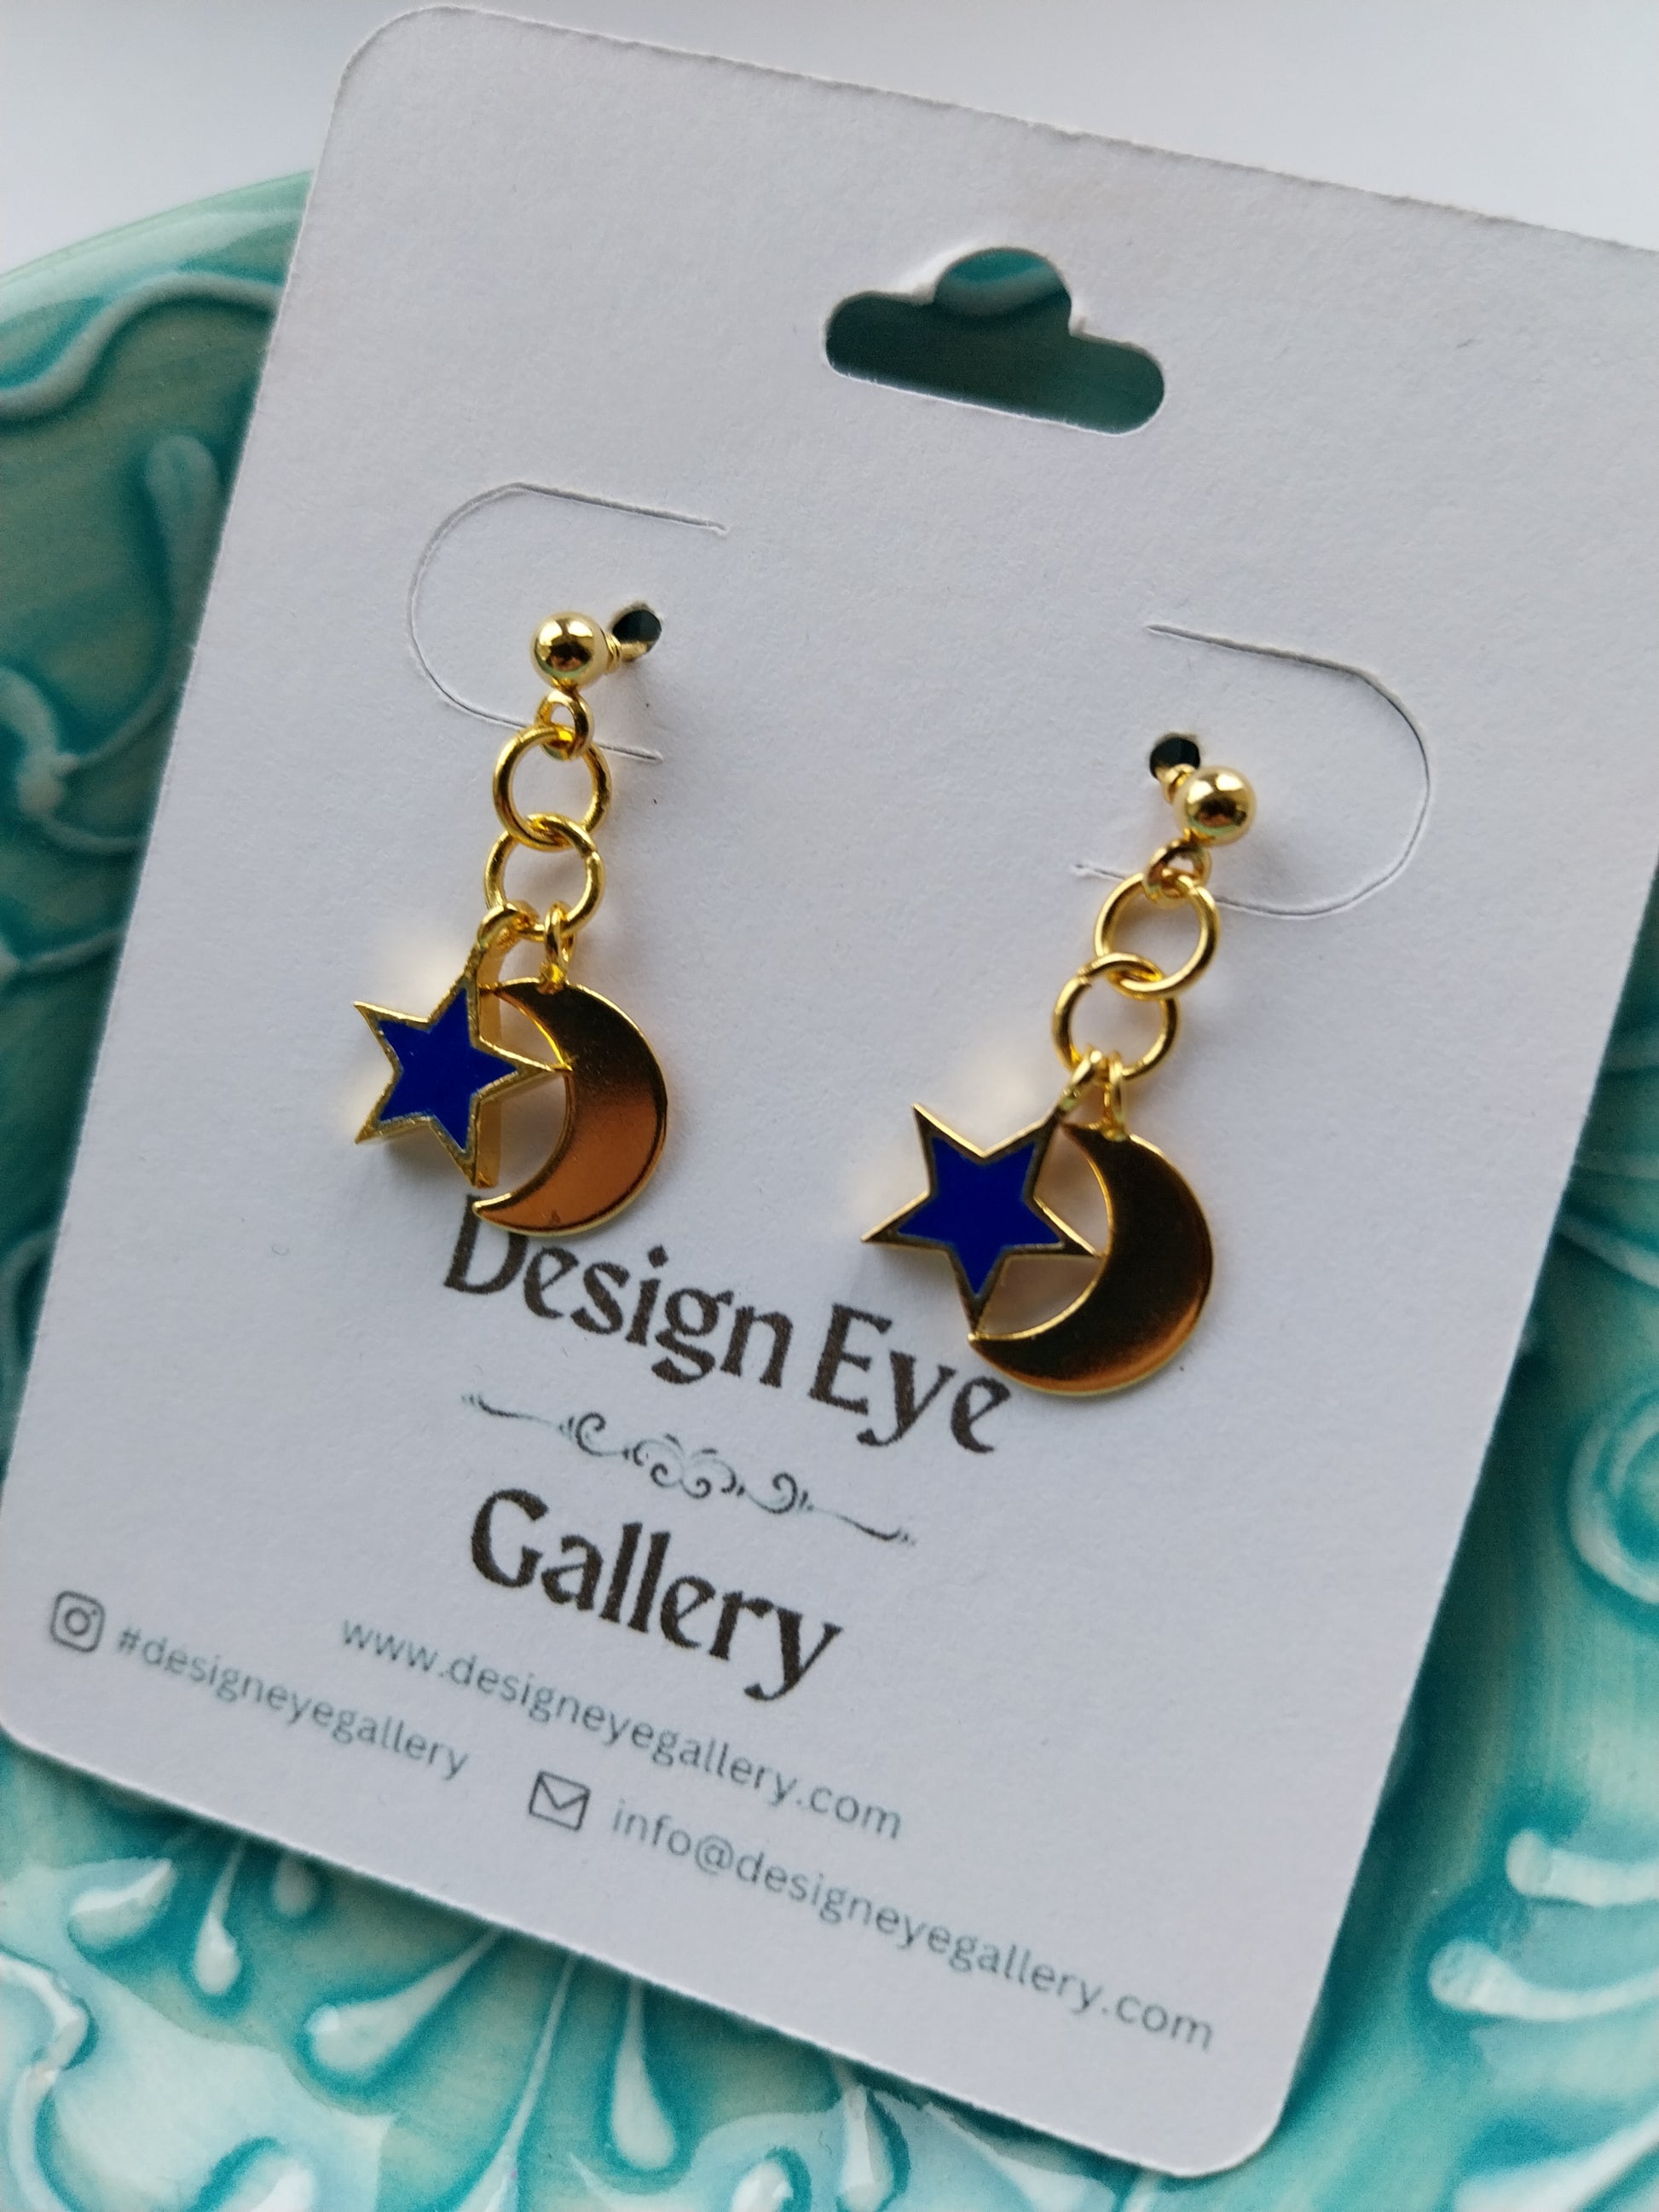 Moon & Star Earrings in Black - design-eye-gallery